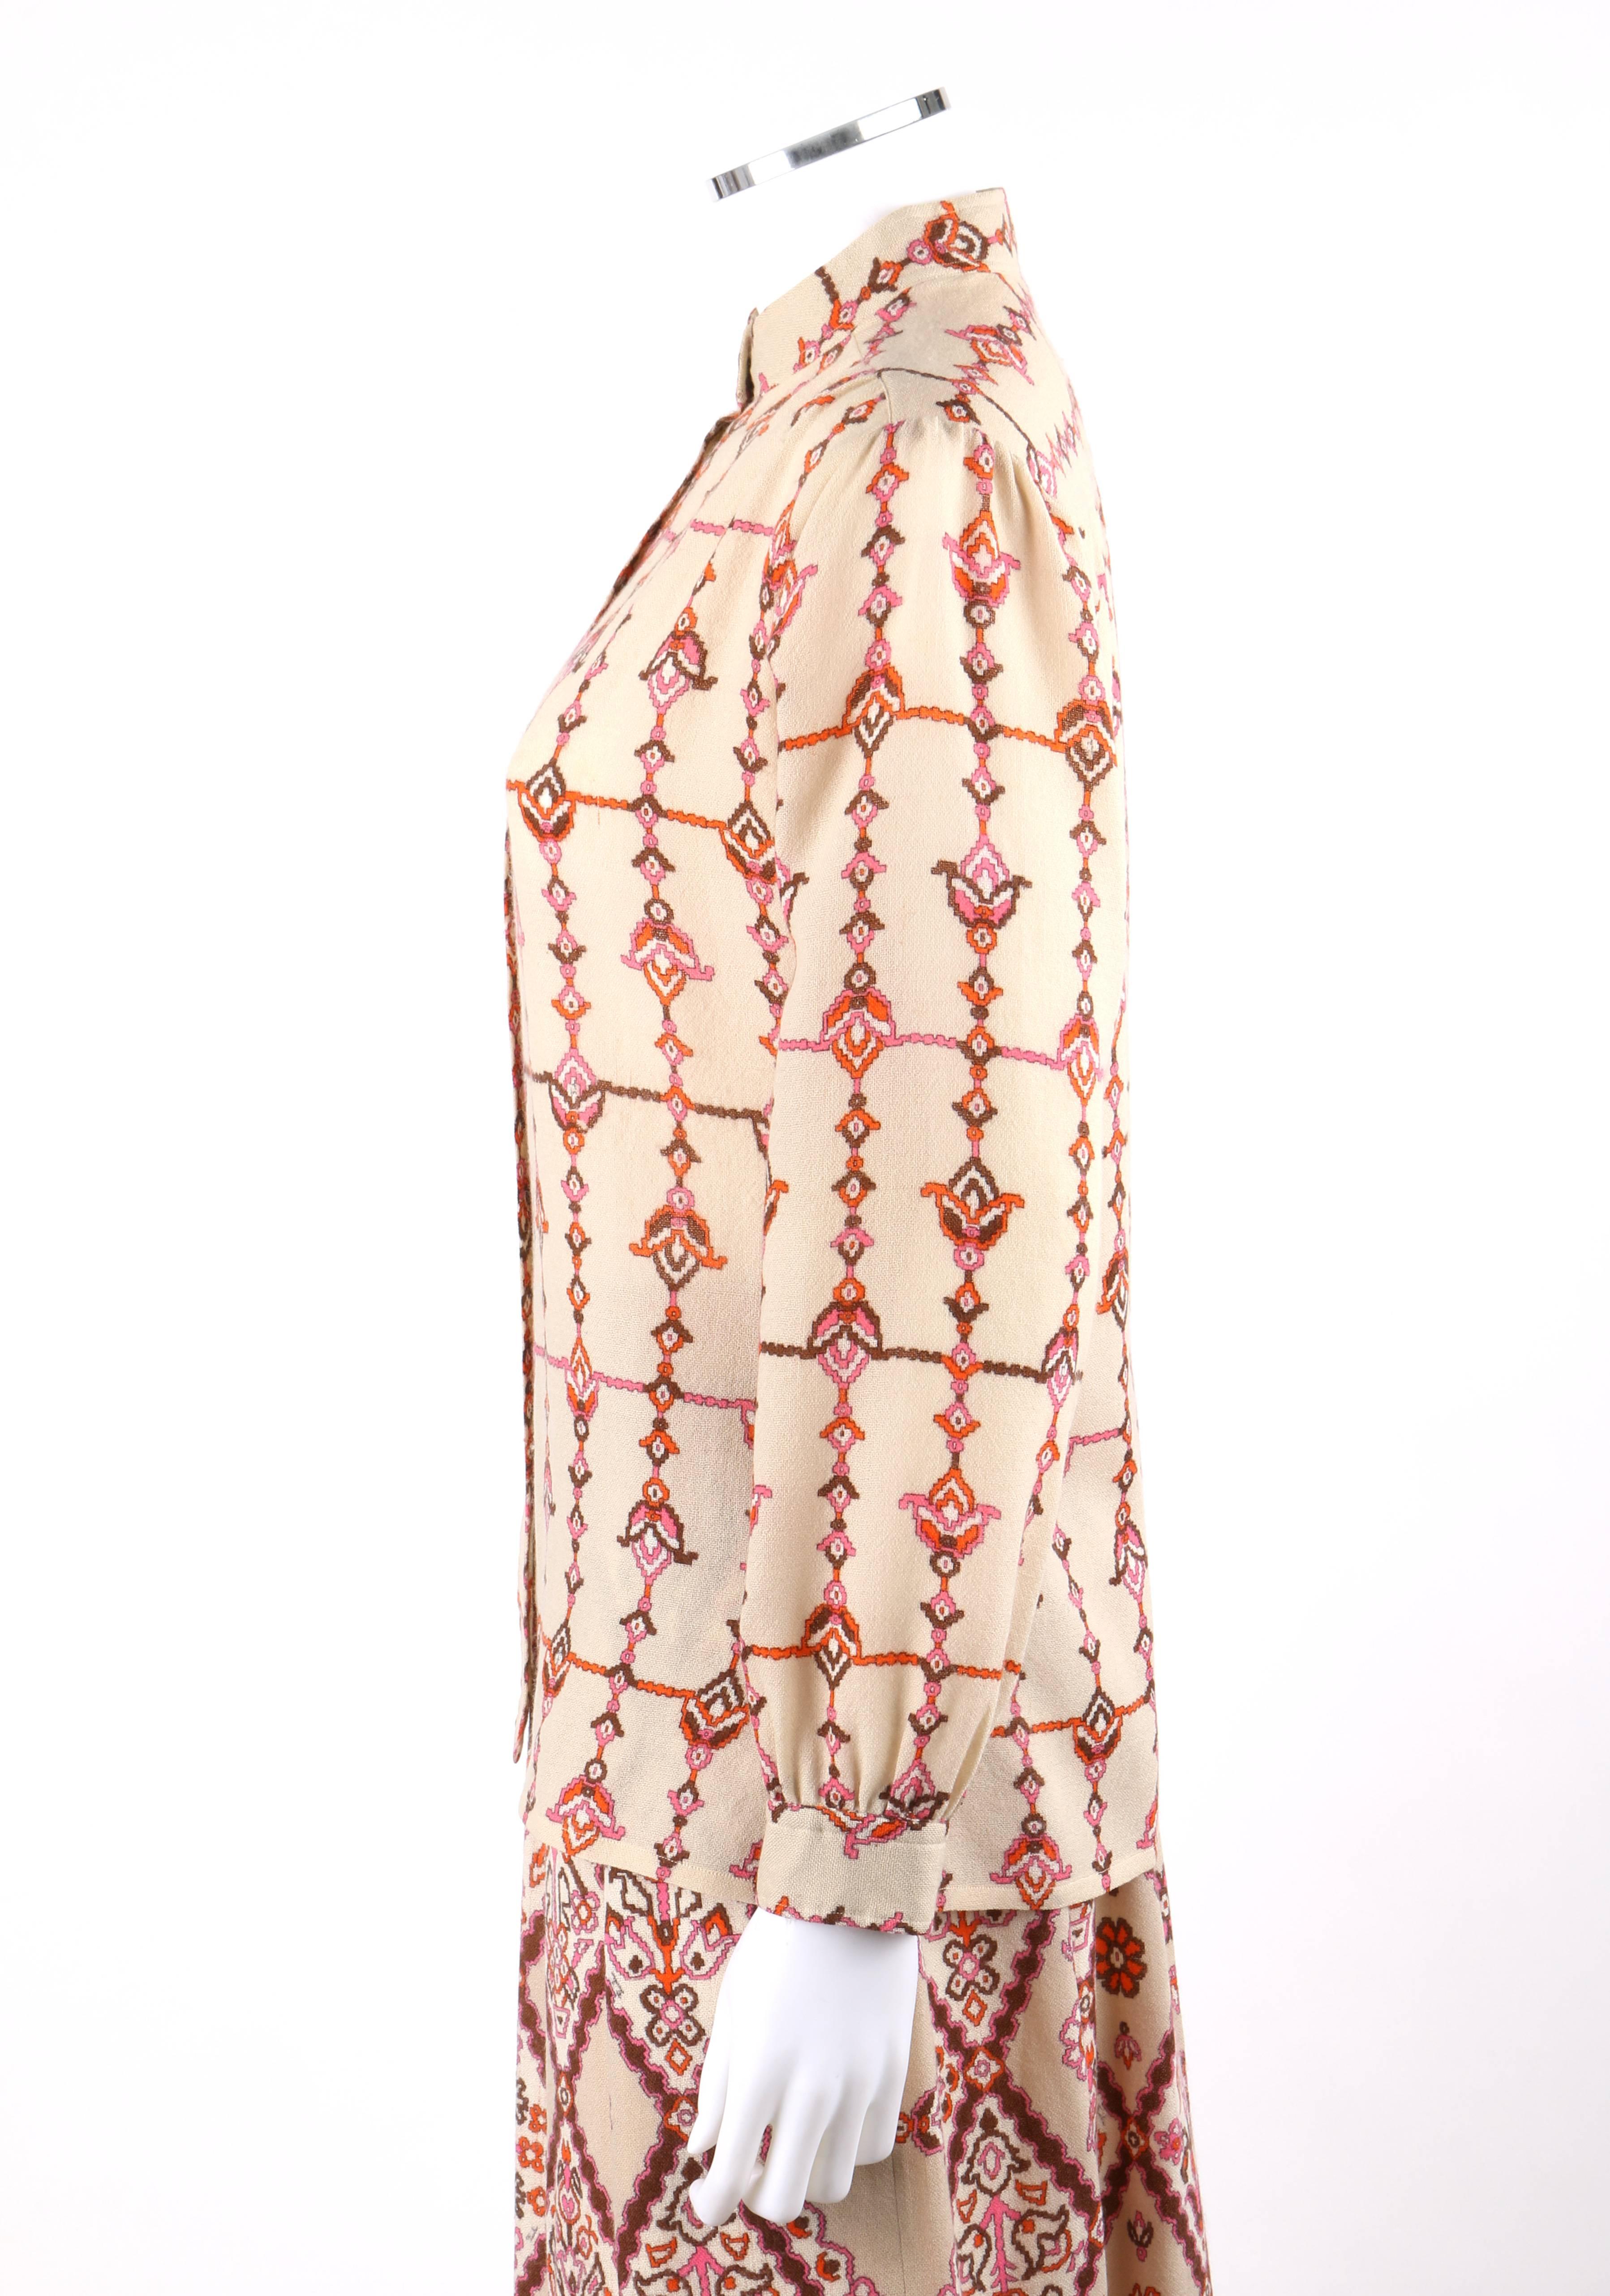 Emilio Pucci Signature Print Hemdbluse geraffte Rock Kleid Set, ca. 1950er Jahre im Angebot 3